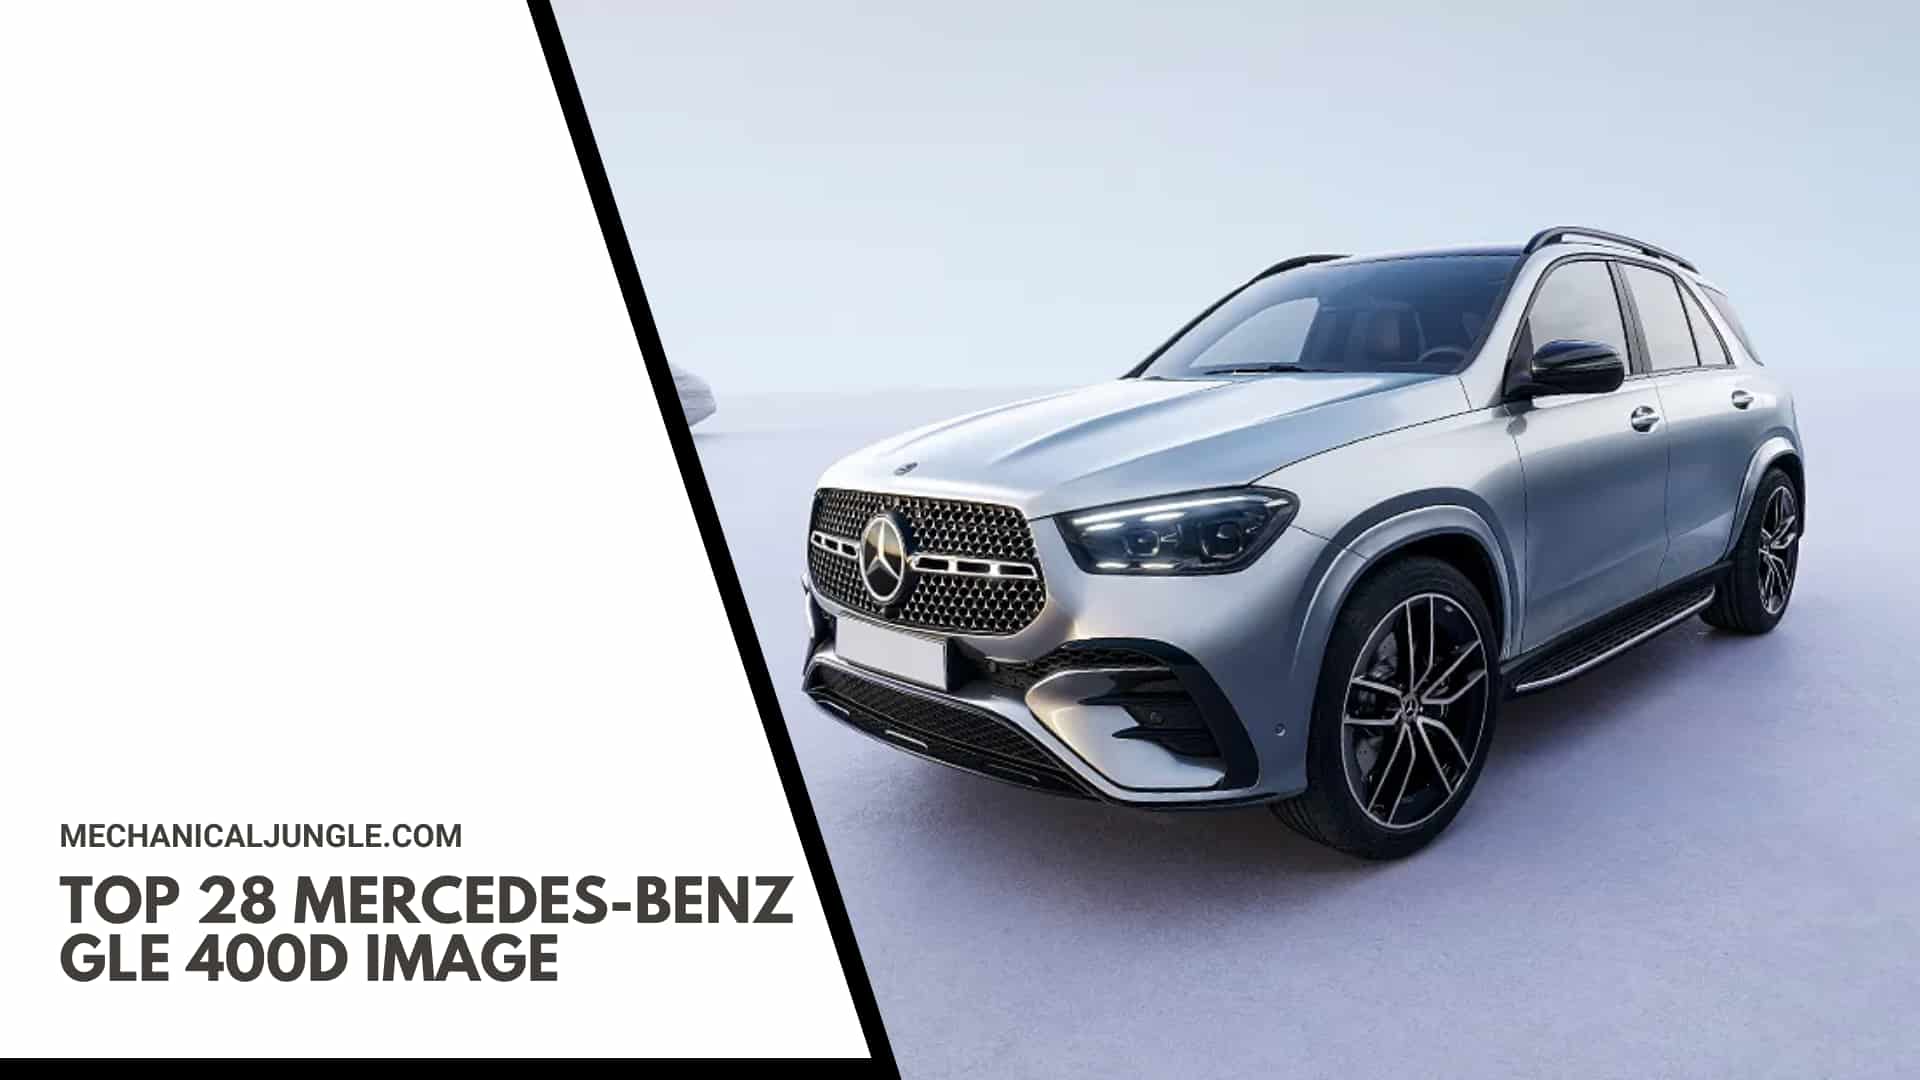 Top 28 Mercedes-Benz GLE 400d Image